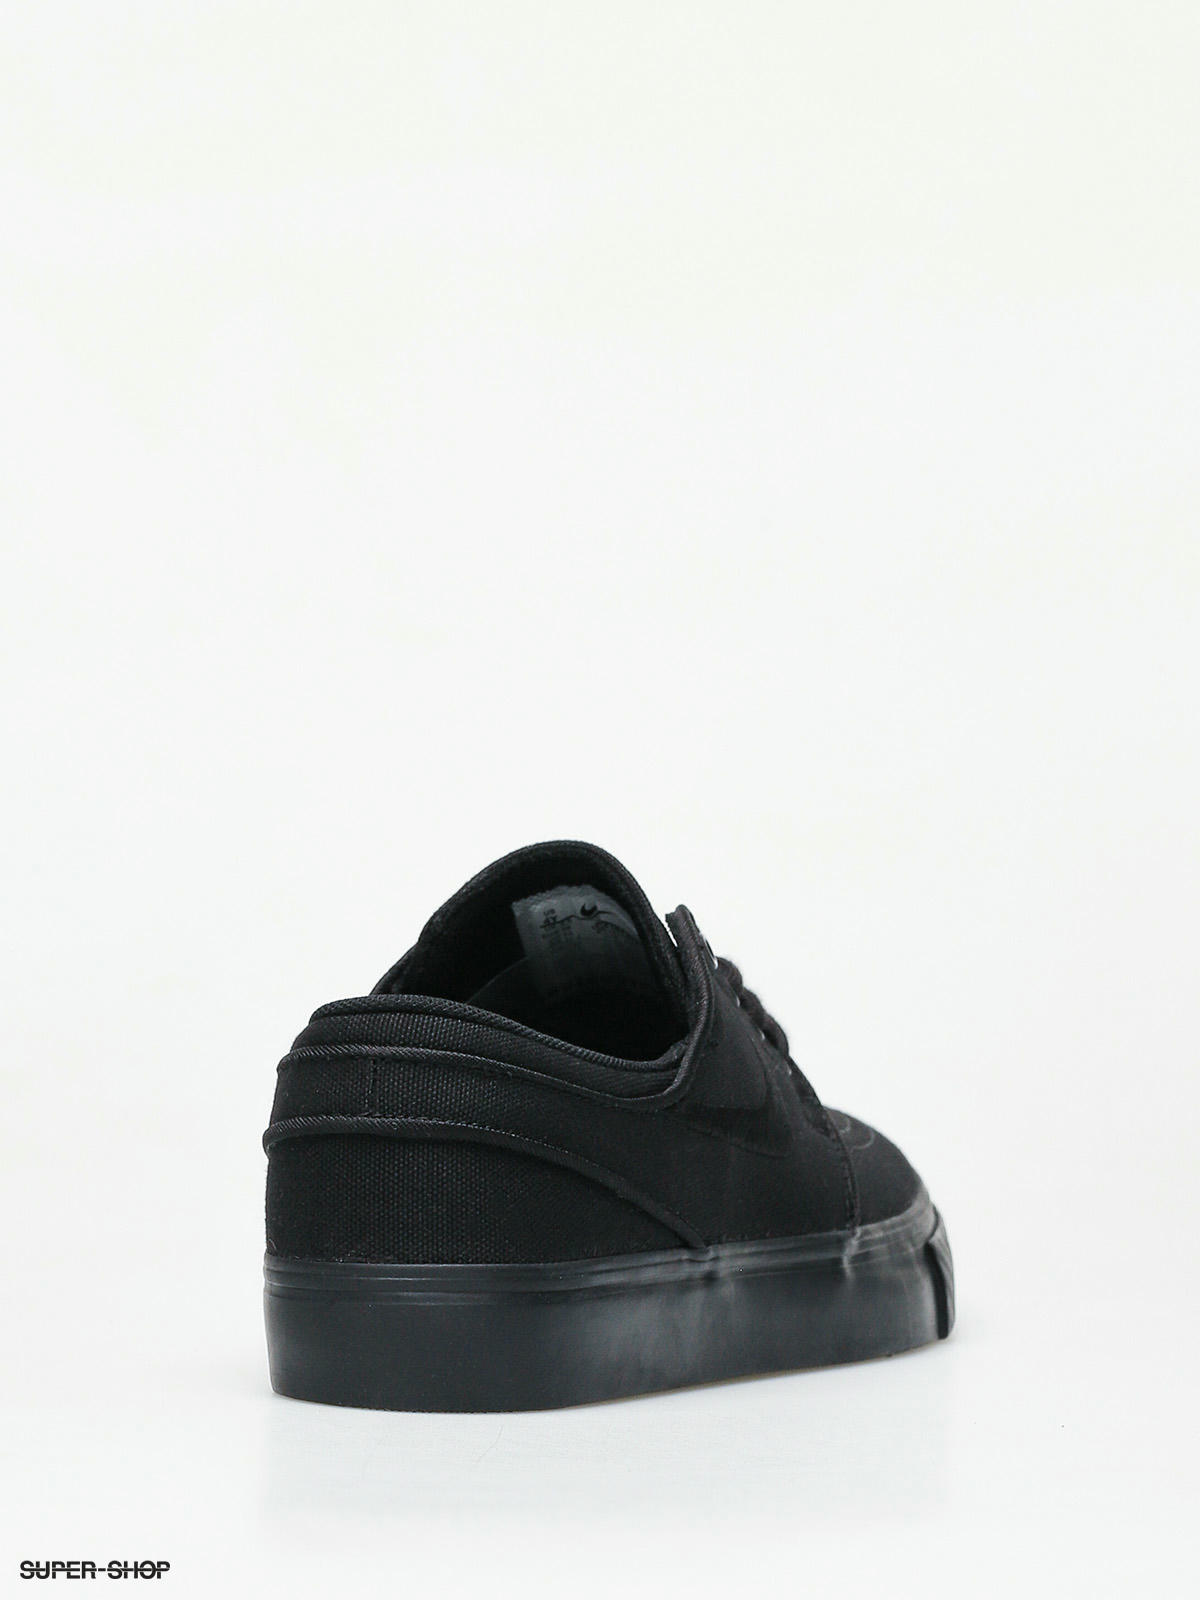 black nike sb shoes